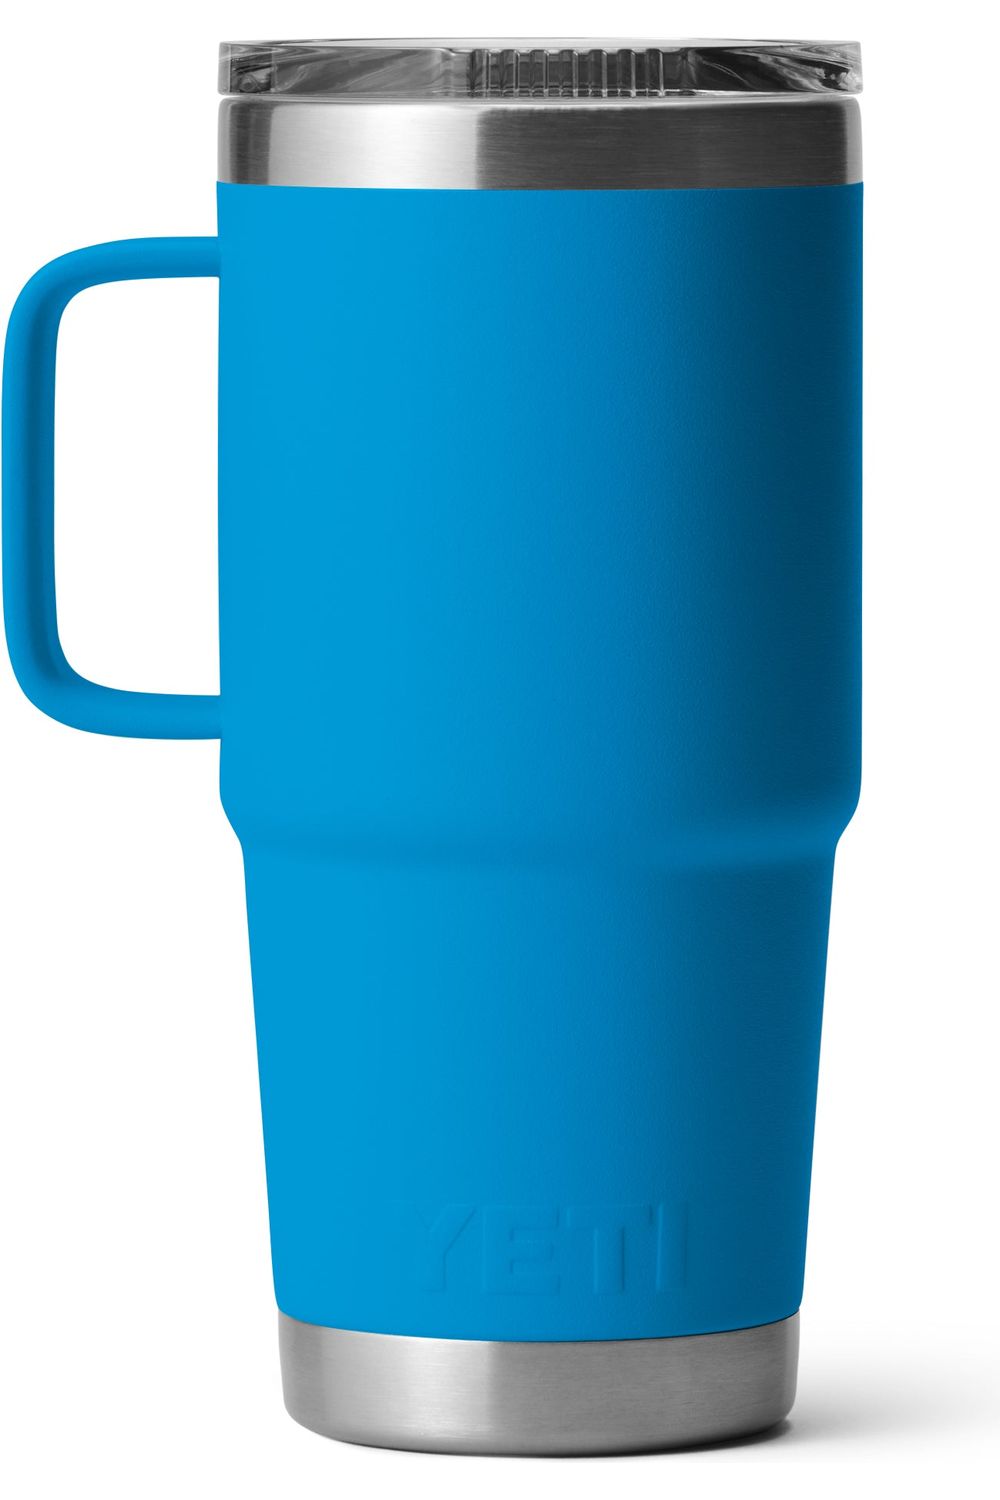 Yeti Rambler 20 Oz Travel Mug Blue Wave